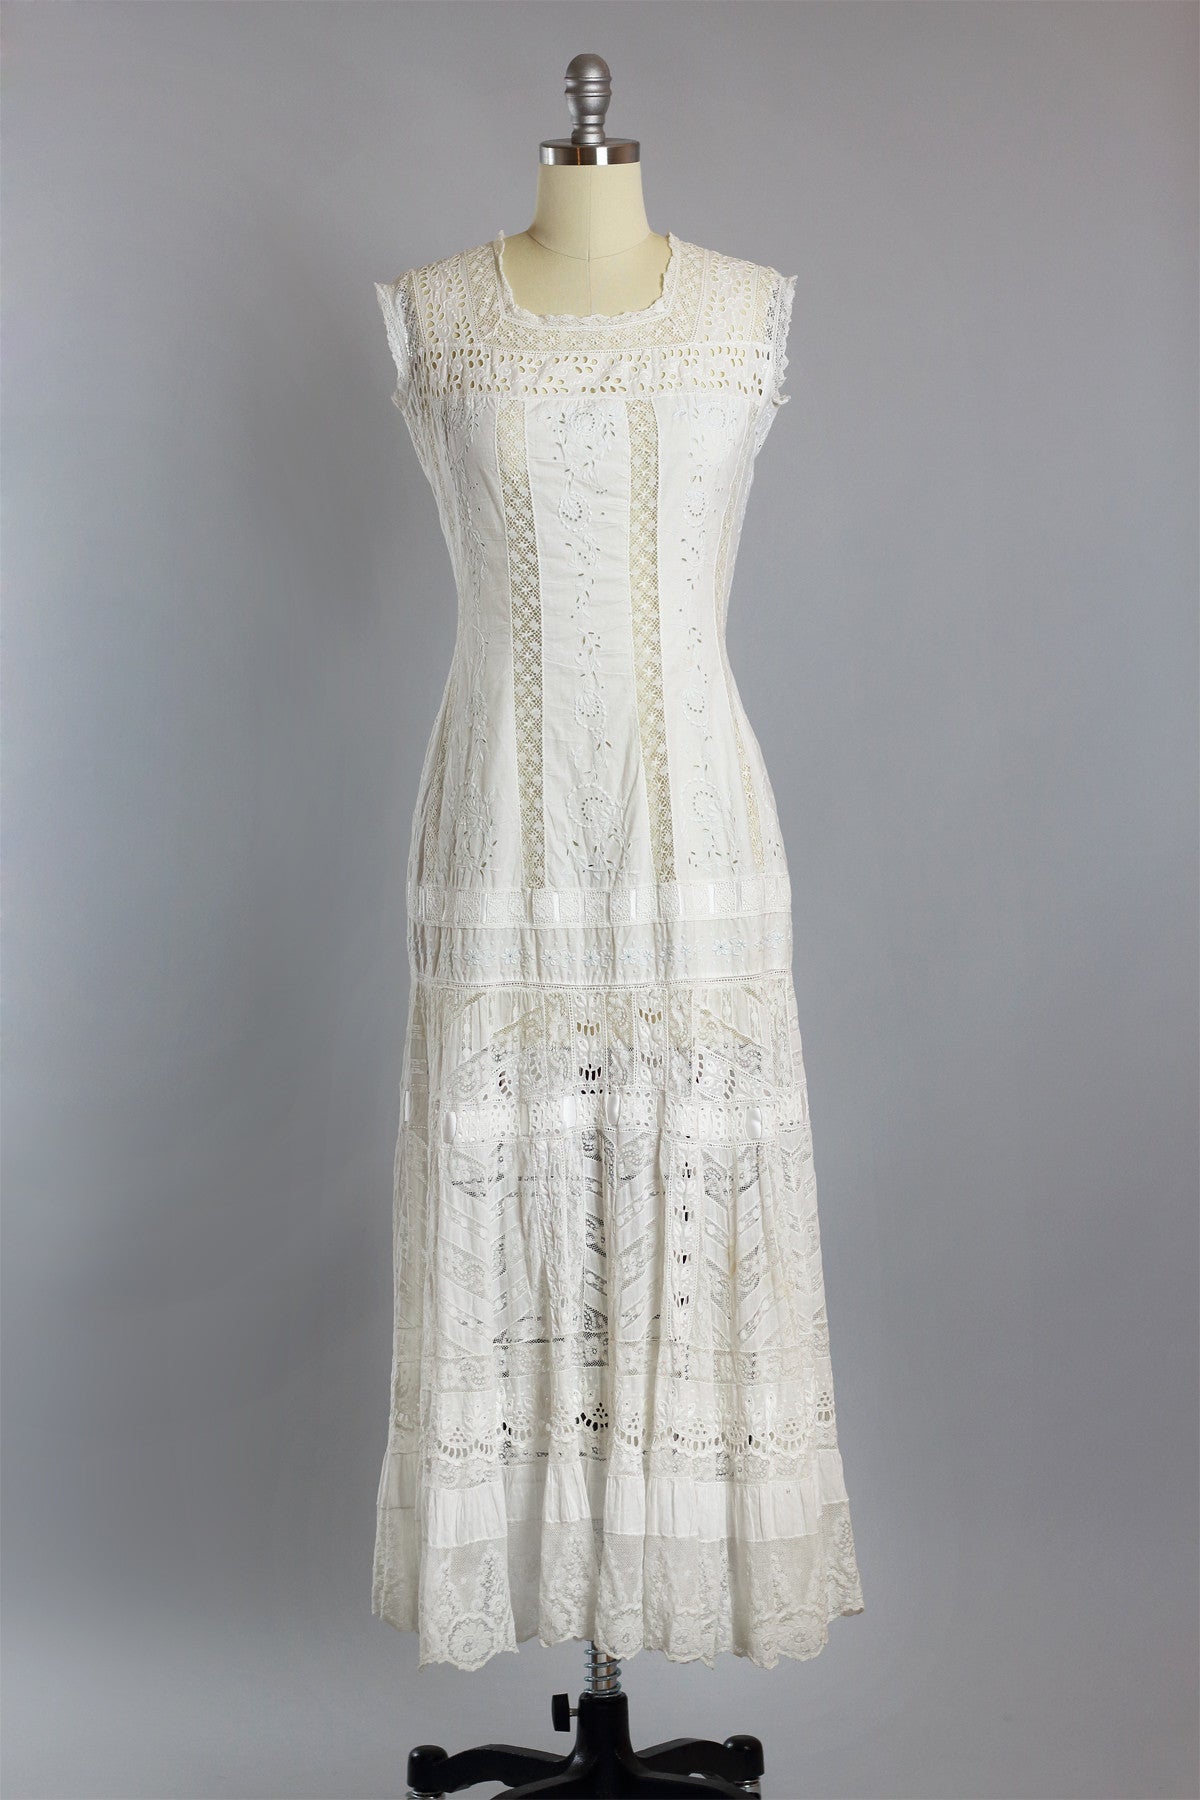 Lace Dreams Edwardian Wedding Dress